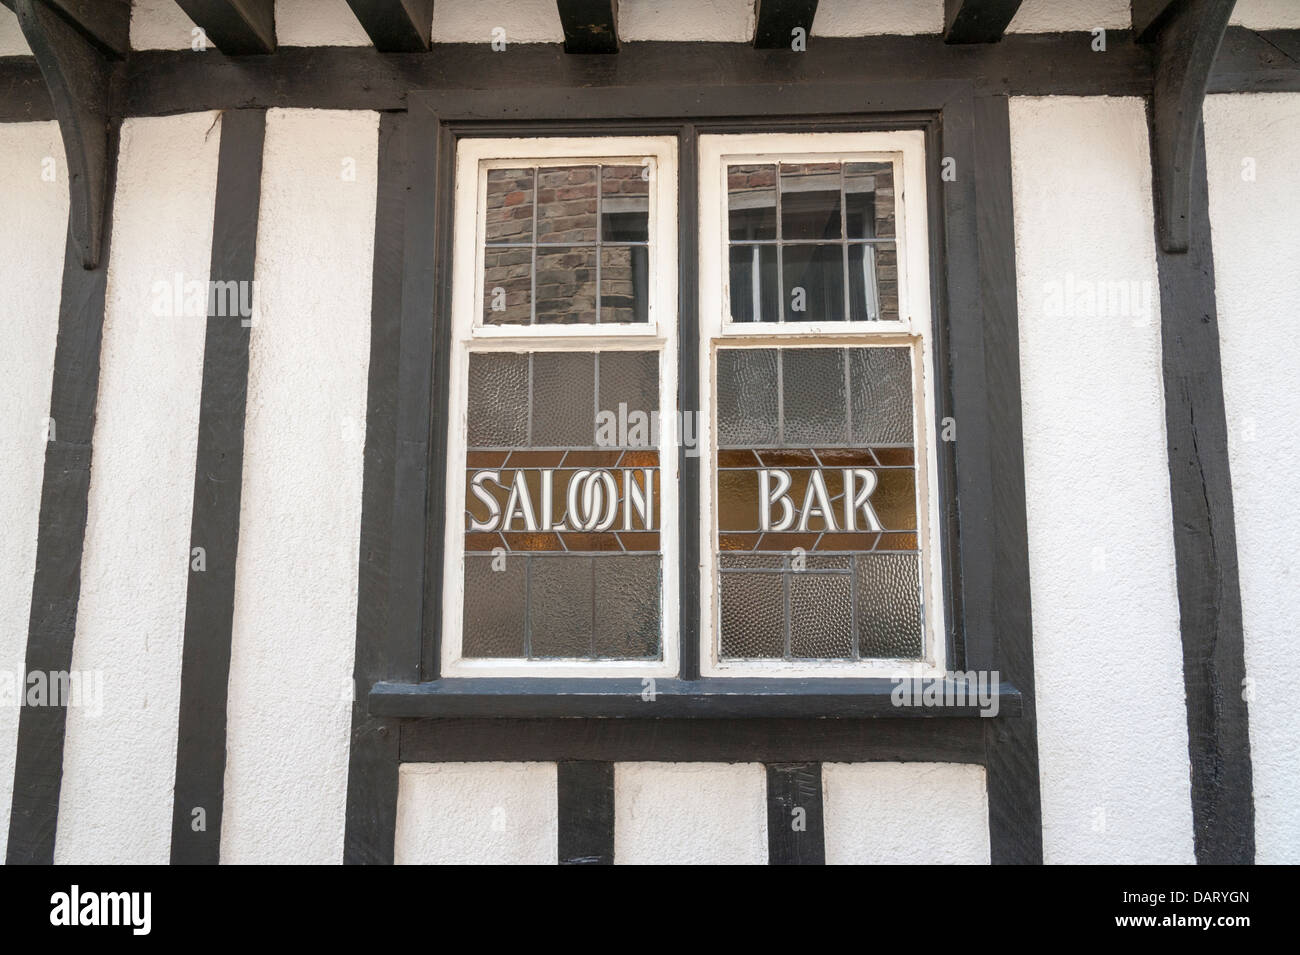 Salon bar sign on an old pub window Stock Photo